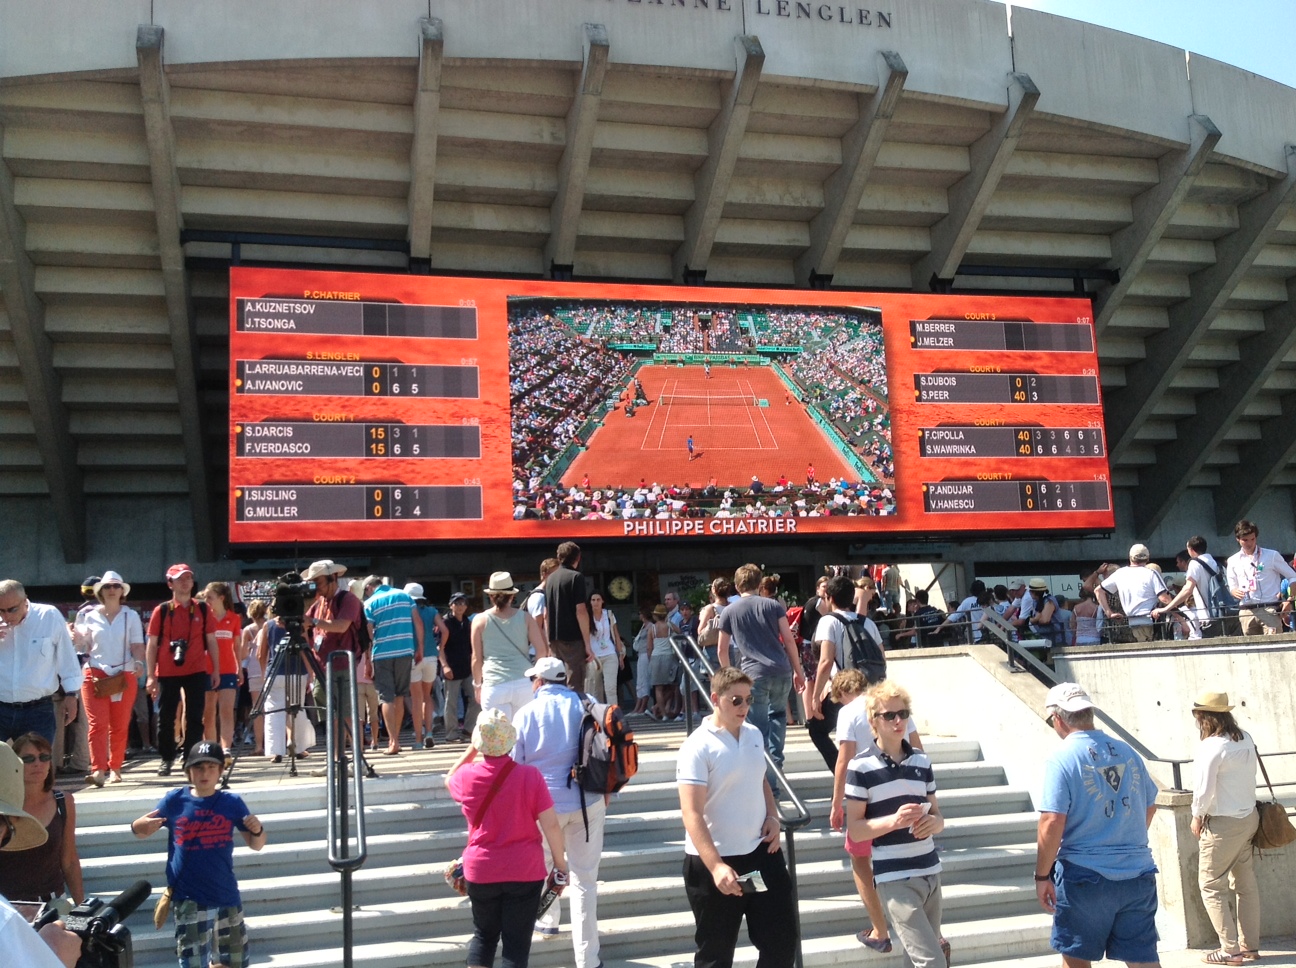 Écran géant outdoor Roland Garros